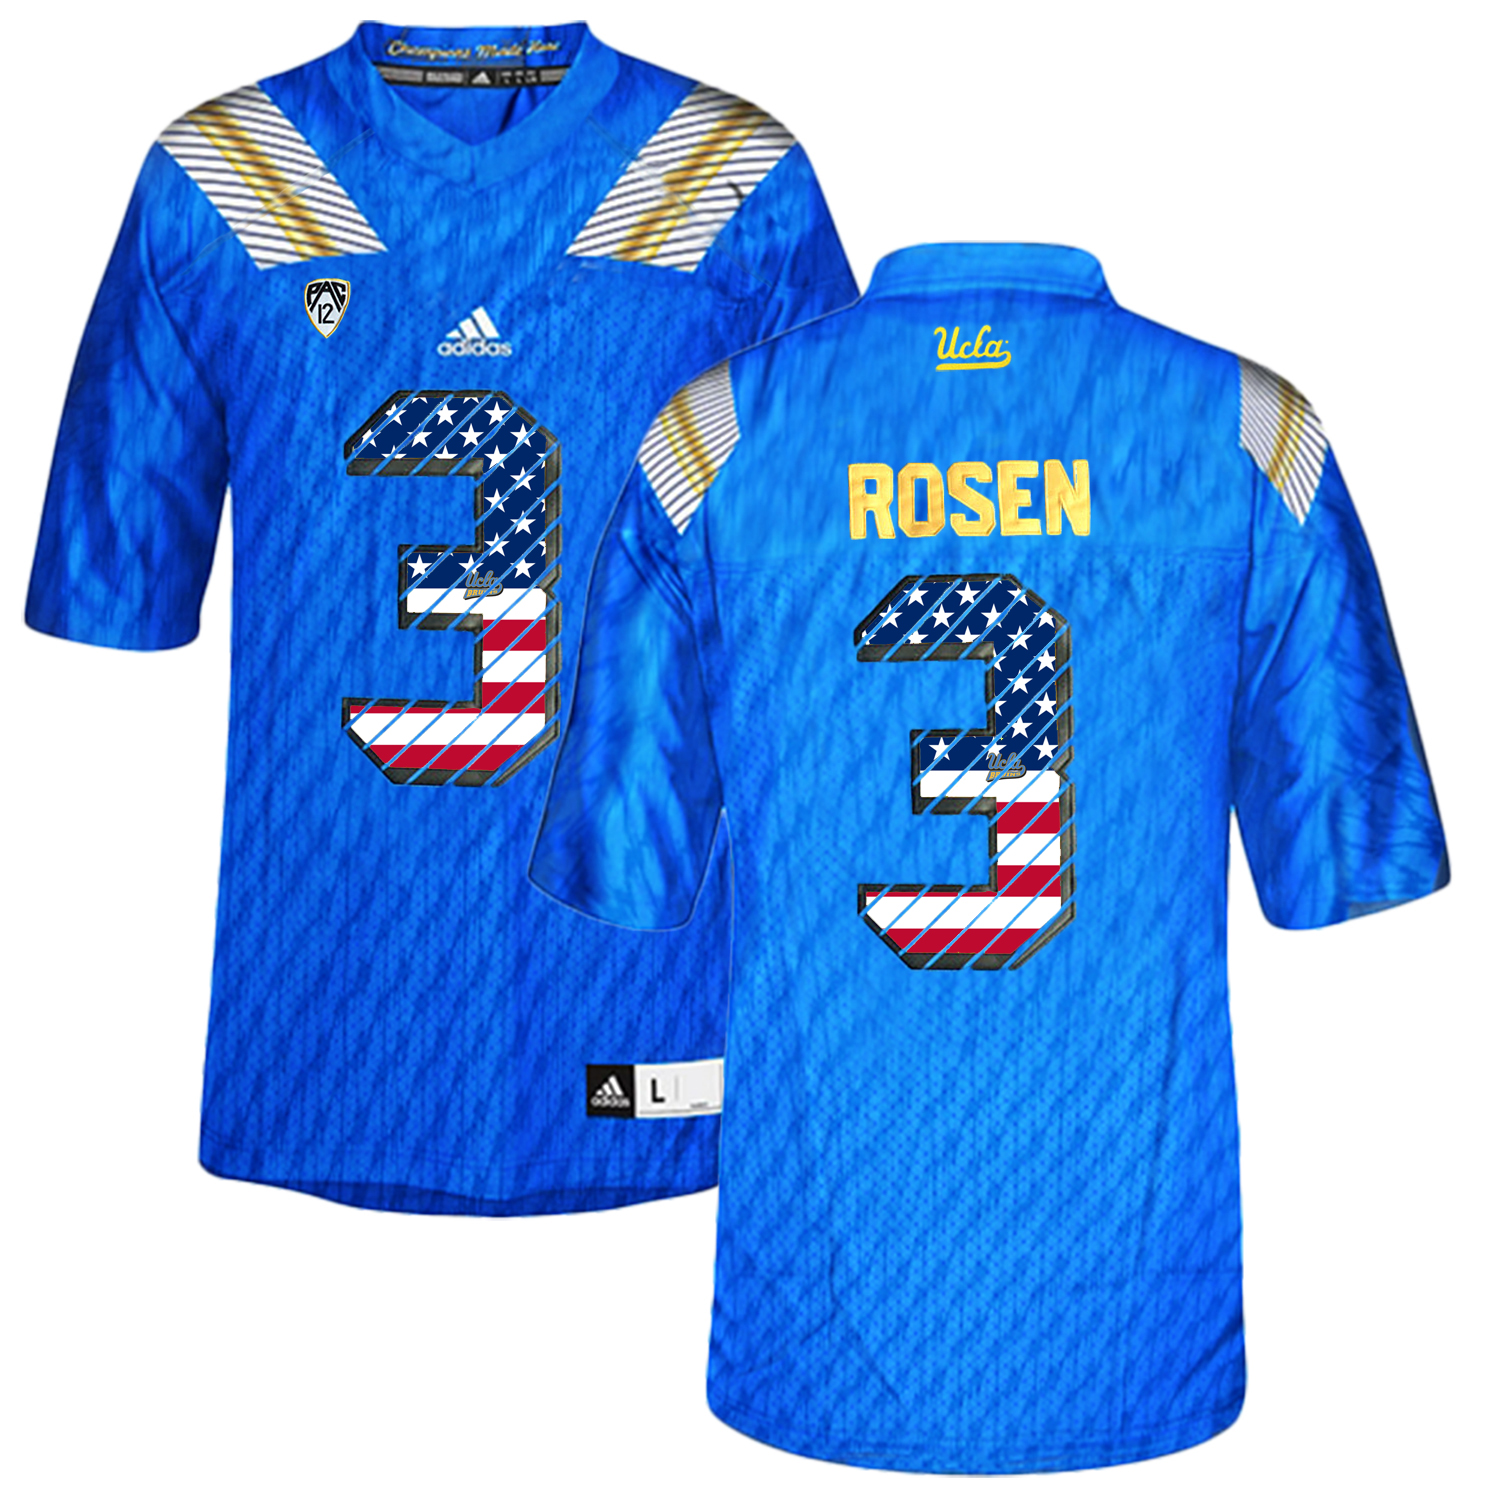 UCLA Bruins 3 Josh Rosen Blue College Football Authentic Jersey Blue